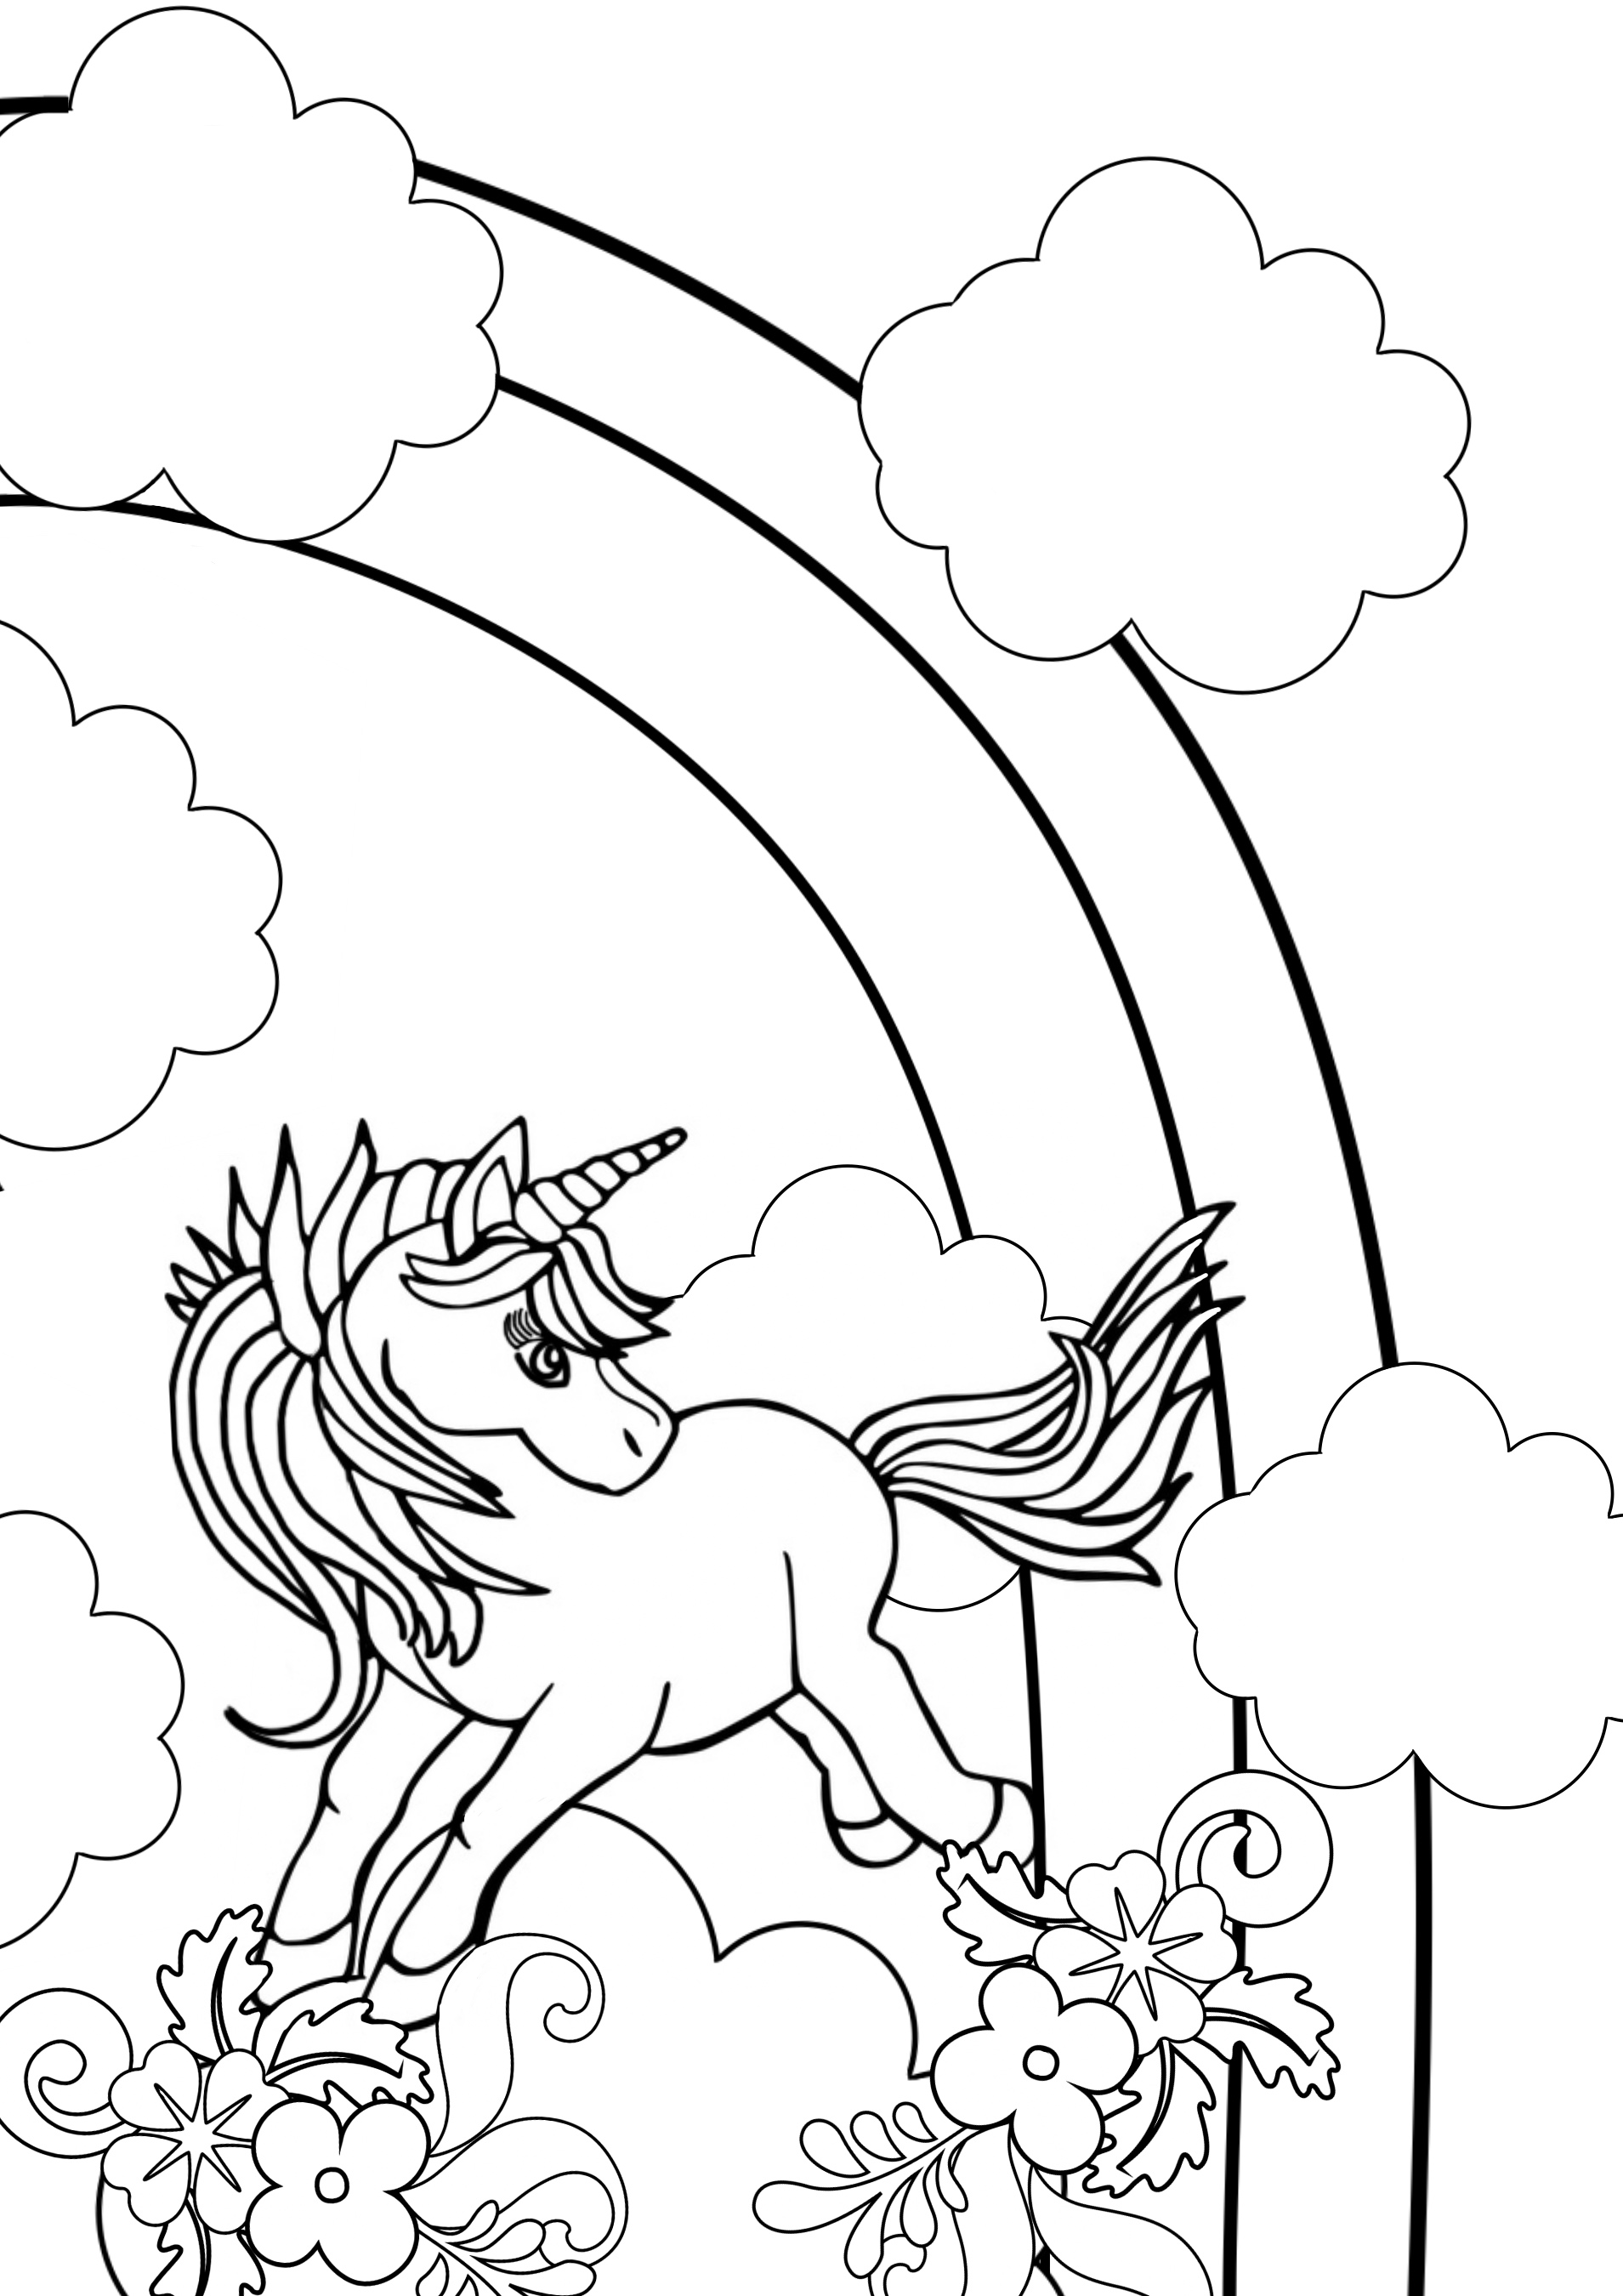 Rainbow unicorn coloring page